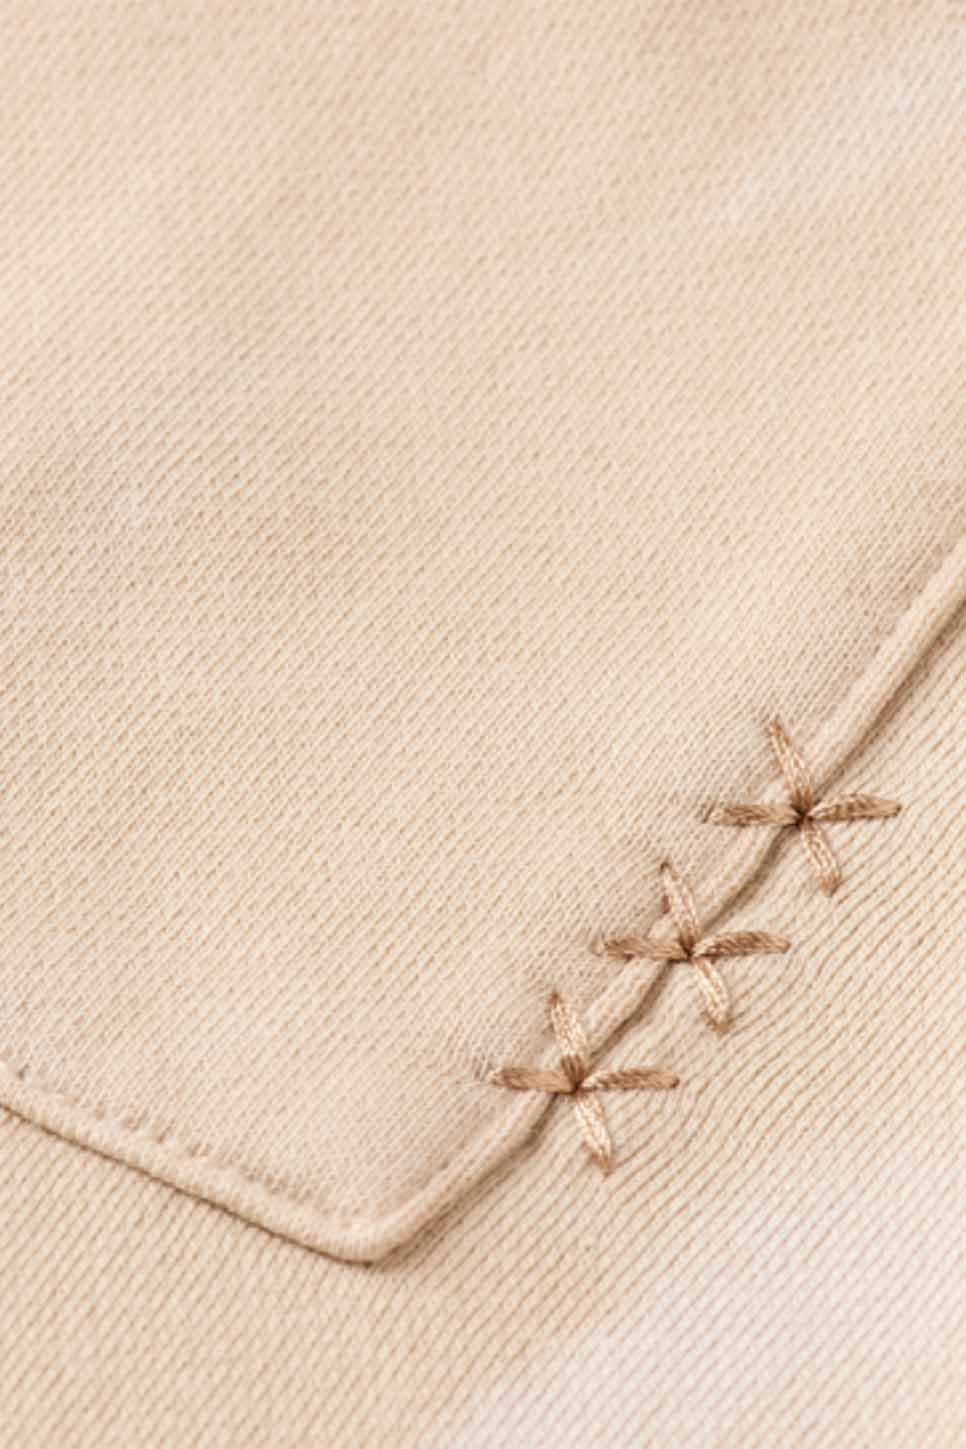 Scotch & Soda - Washed Polo Collar Sweatshirt - Pebble - Detail